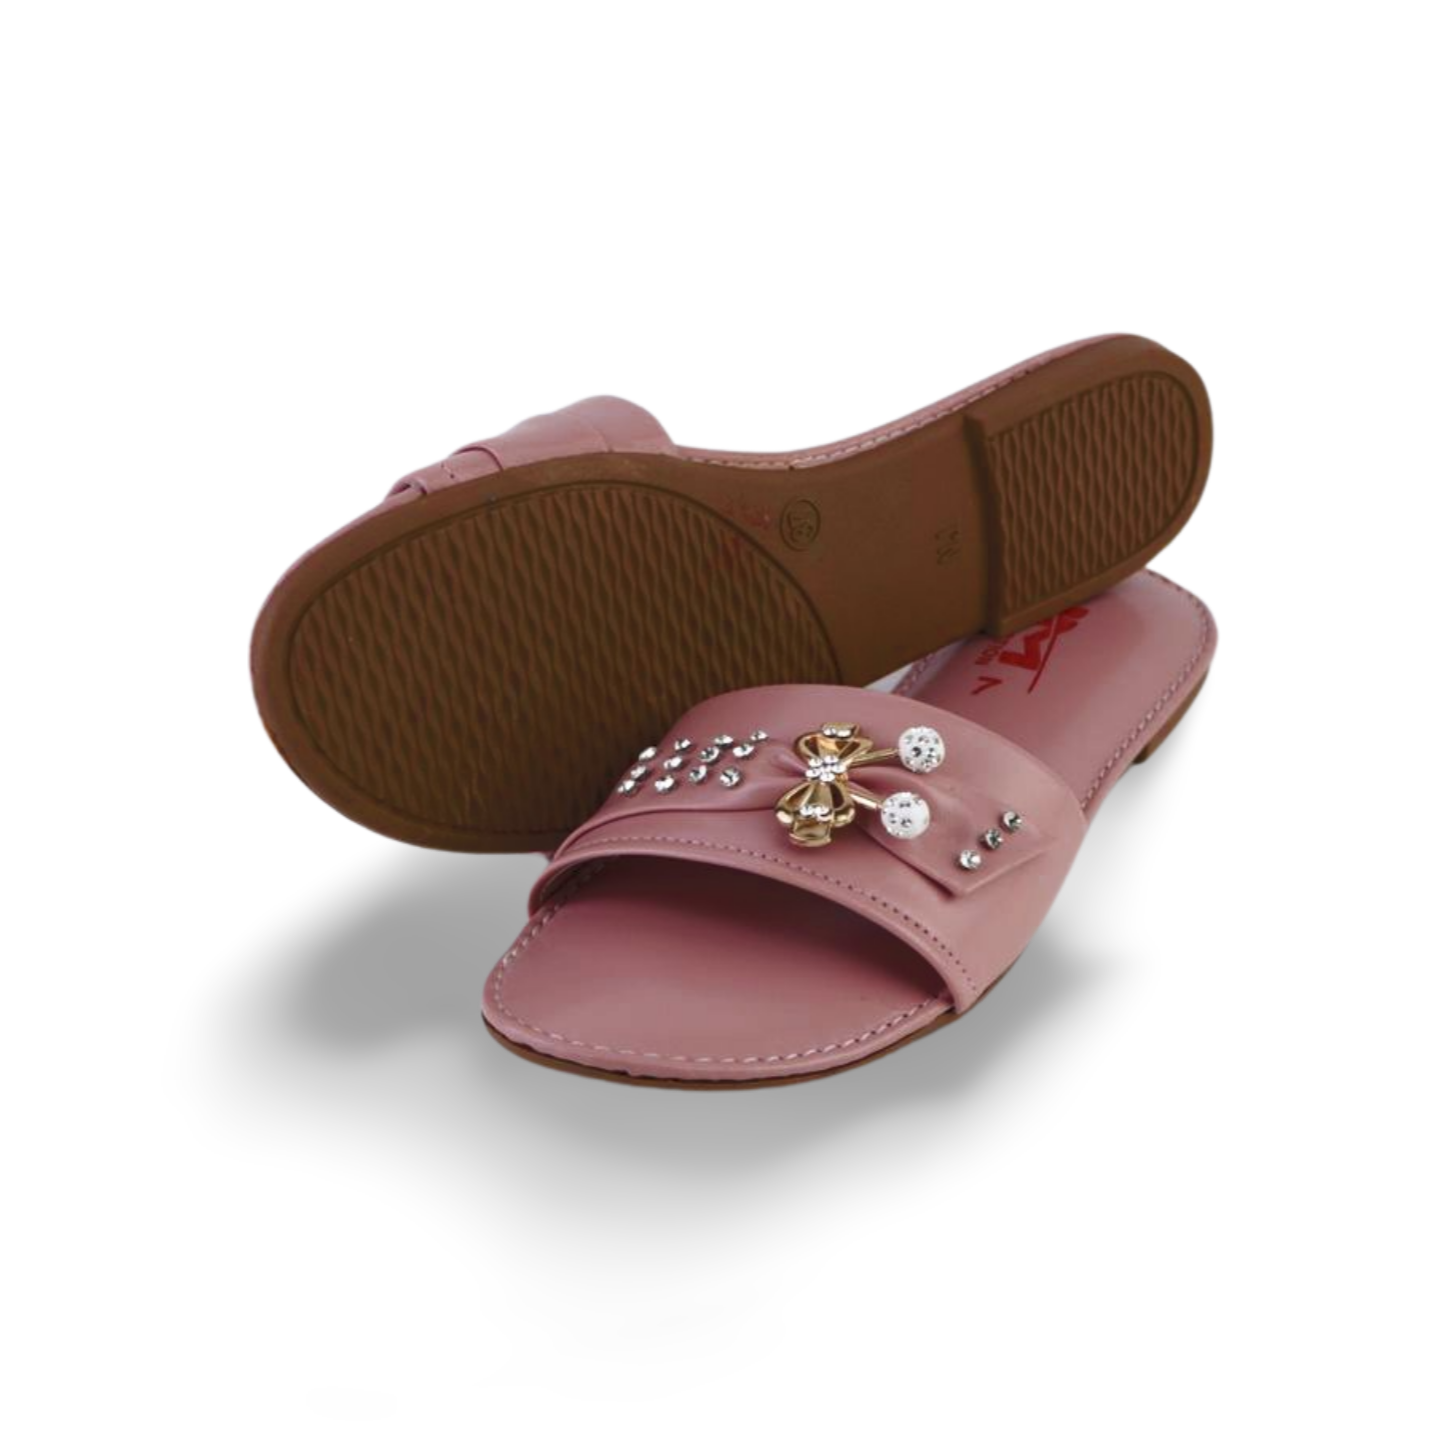 Trendy Soft Women's Slide Slippers With Beautiful Rhinestone Diamond Bow Decoration